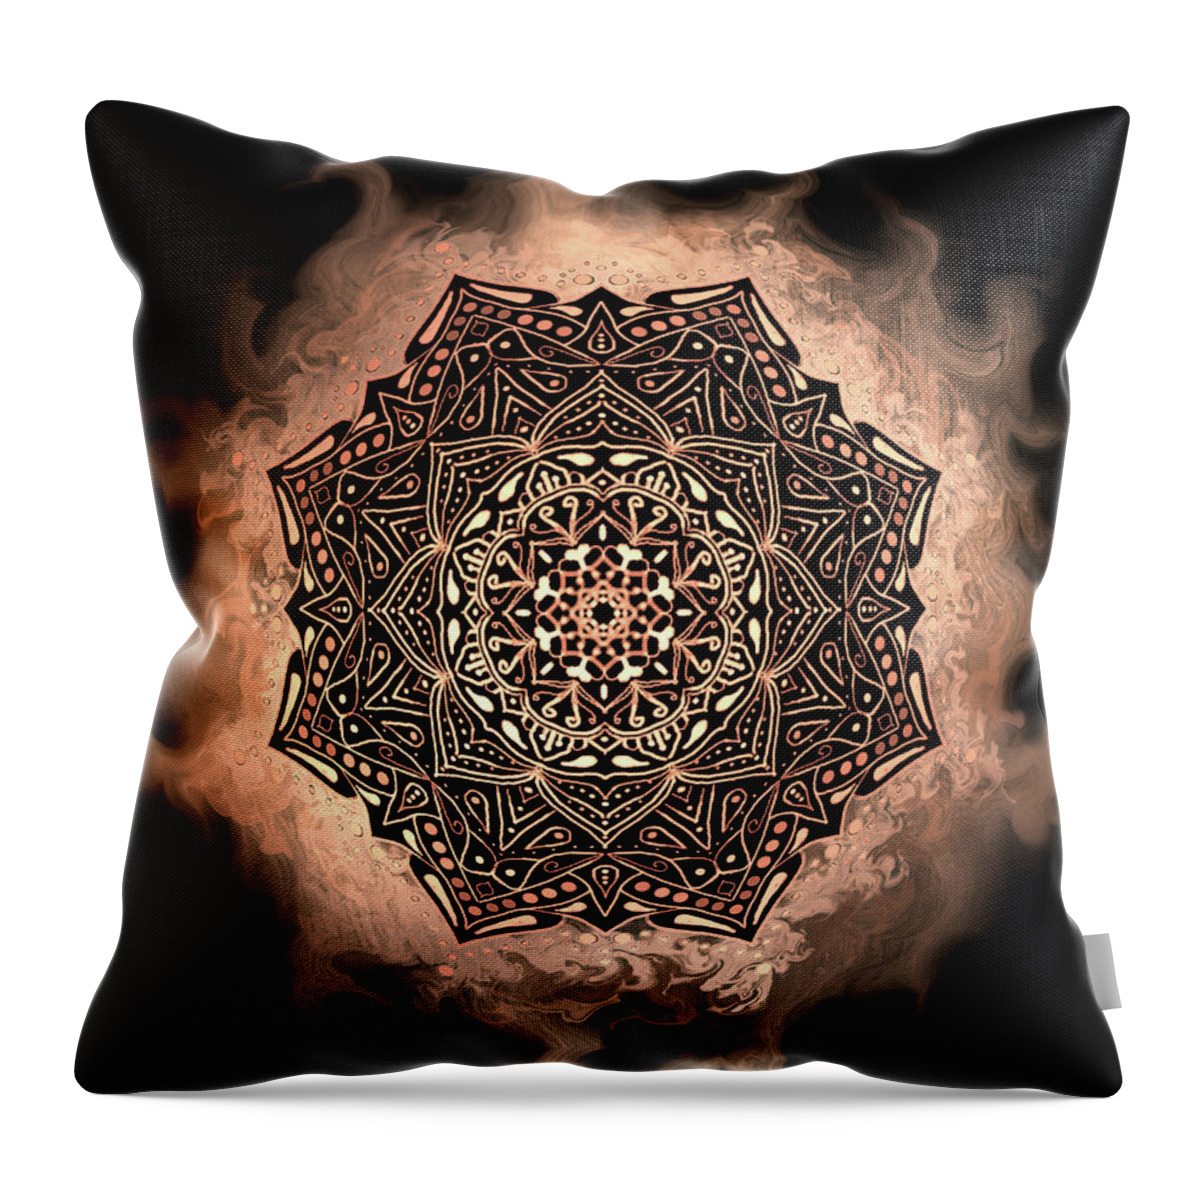 Digital Art Throw Pillow featuring the digital art Earthy Mandala by Artful Oasis